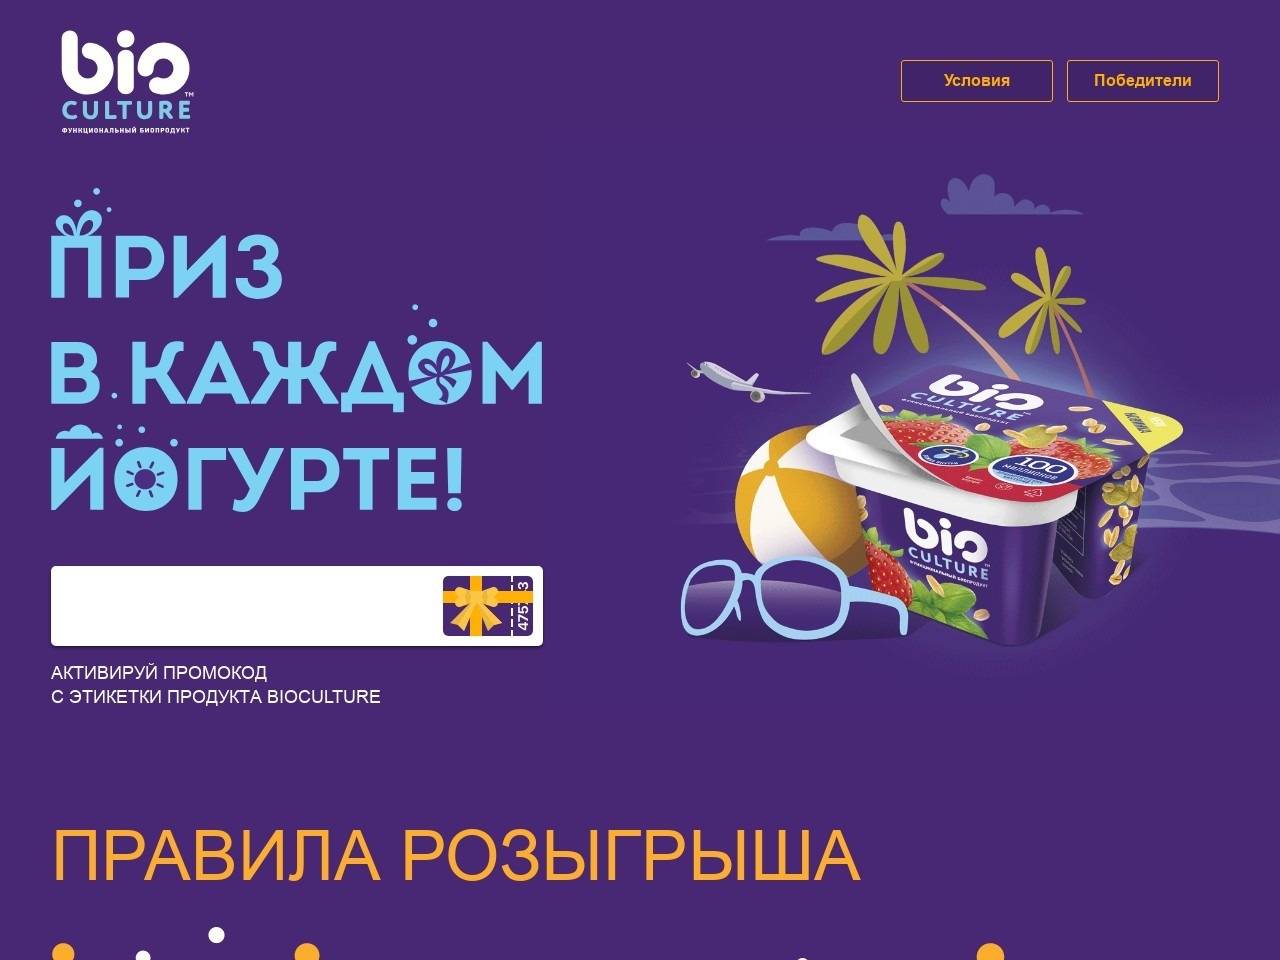 promo.bio-culture.ru регистрация кода